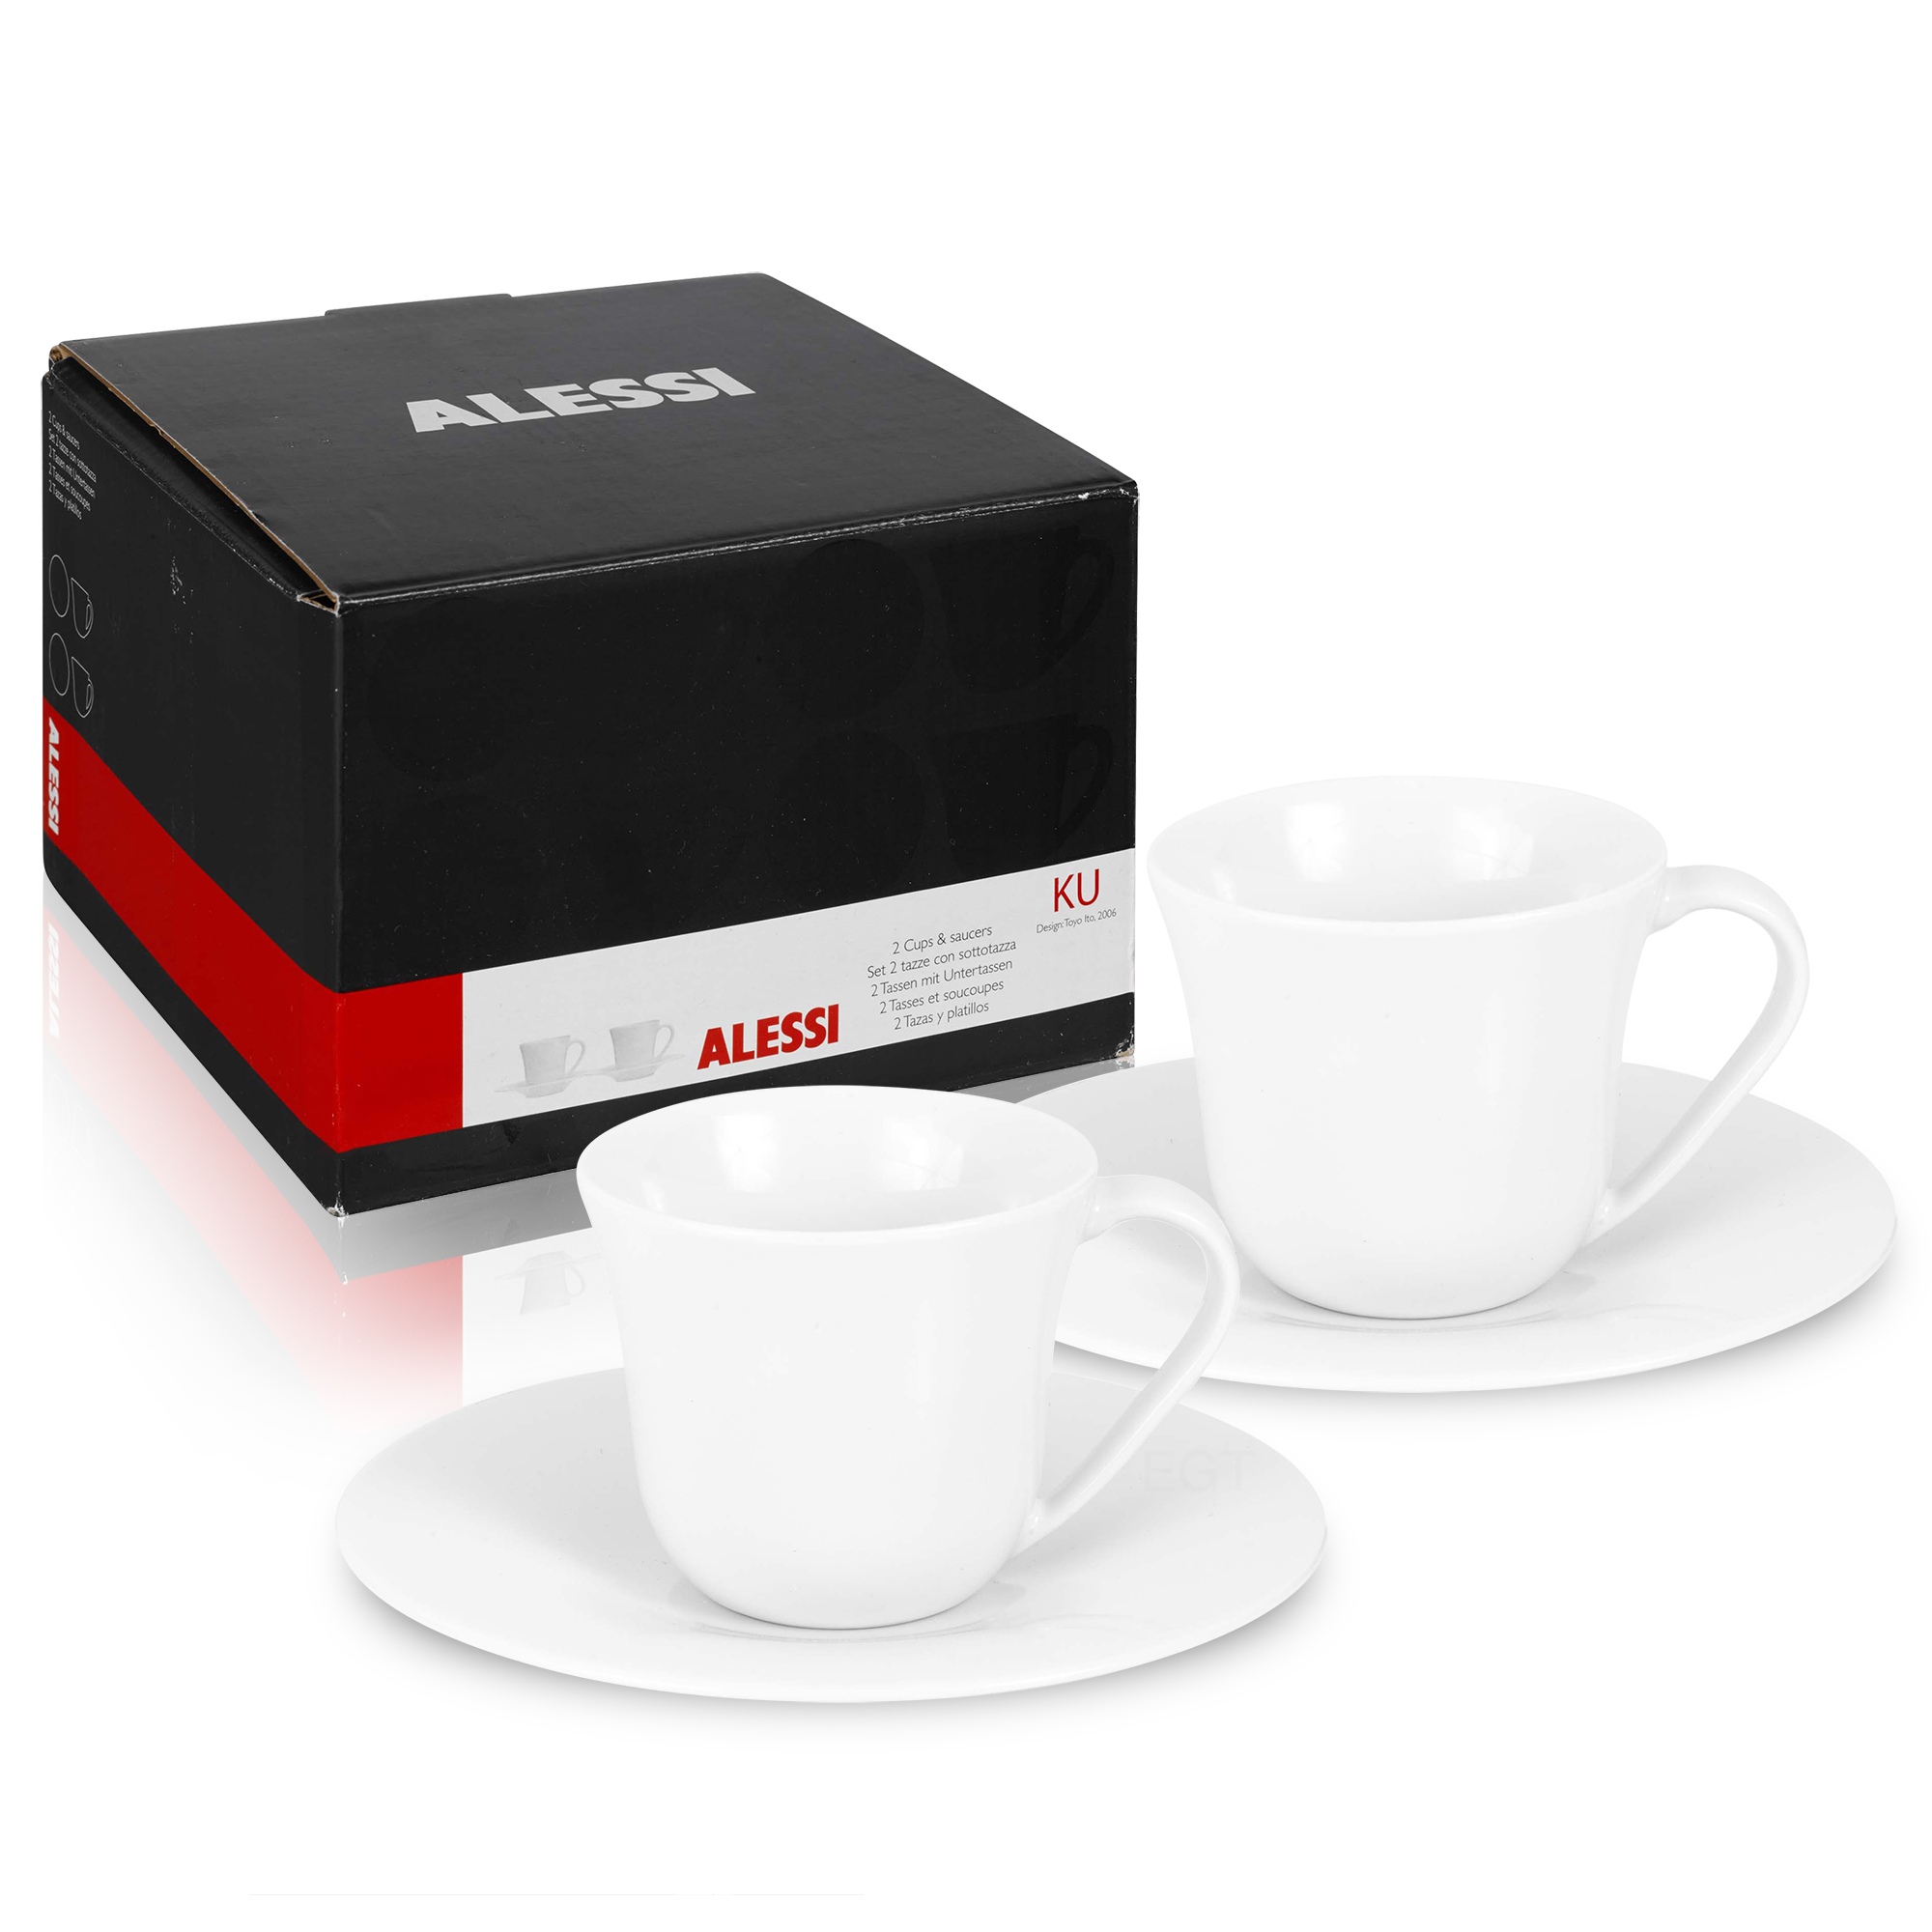 2 4 6 Alessi KU Cups /& Saucer Ceramic Espresso Coffee Porcelaine Gift Boxed Set